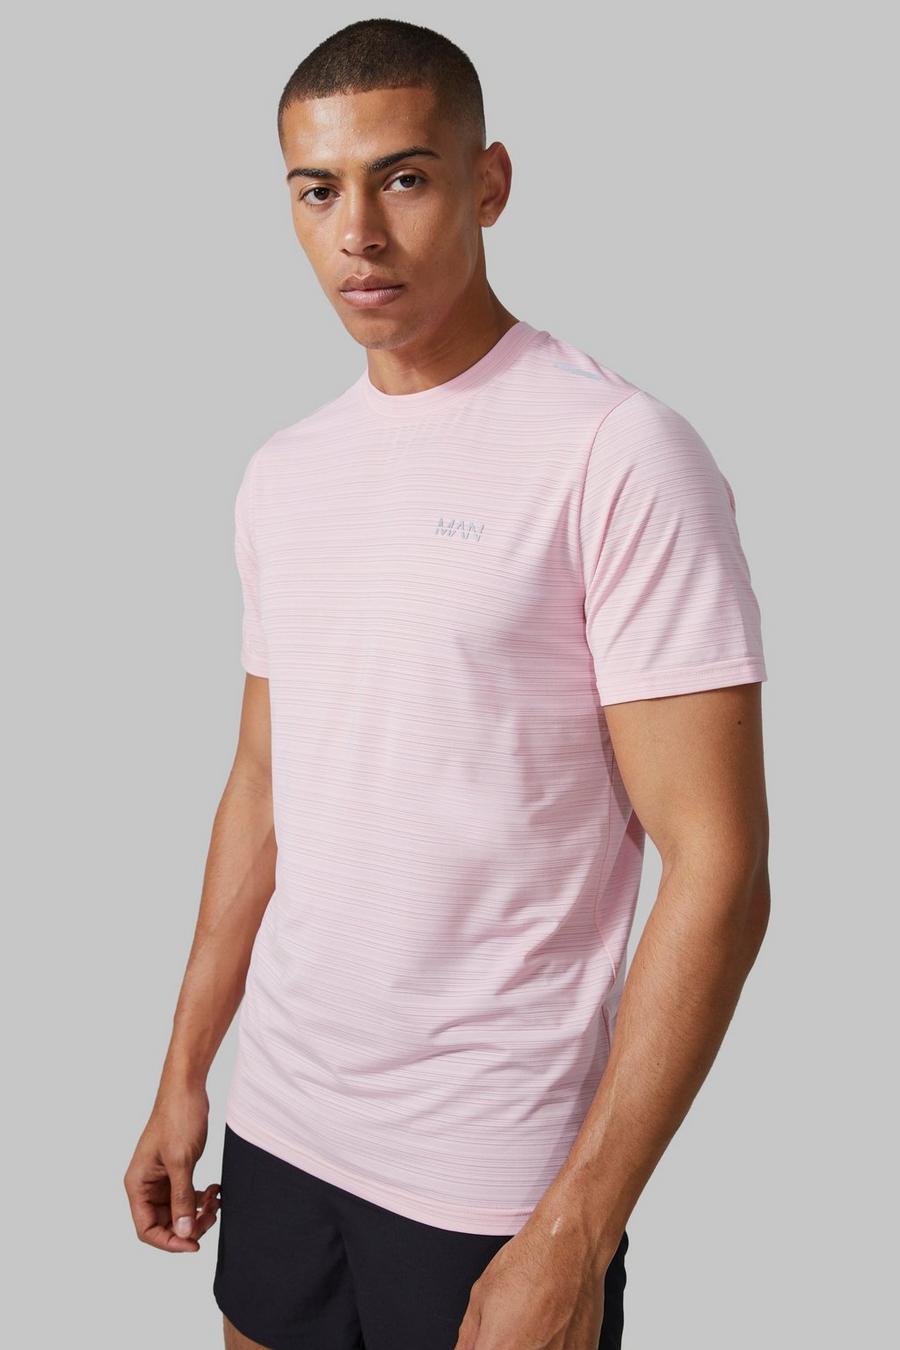 Camiseta MAN Active ligera resistente, Light pink